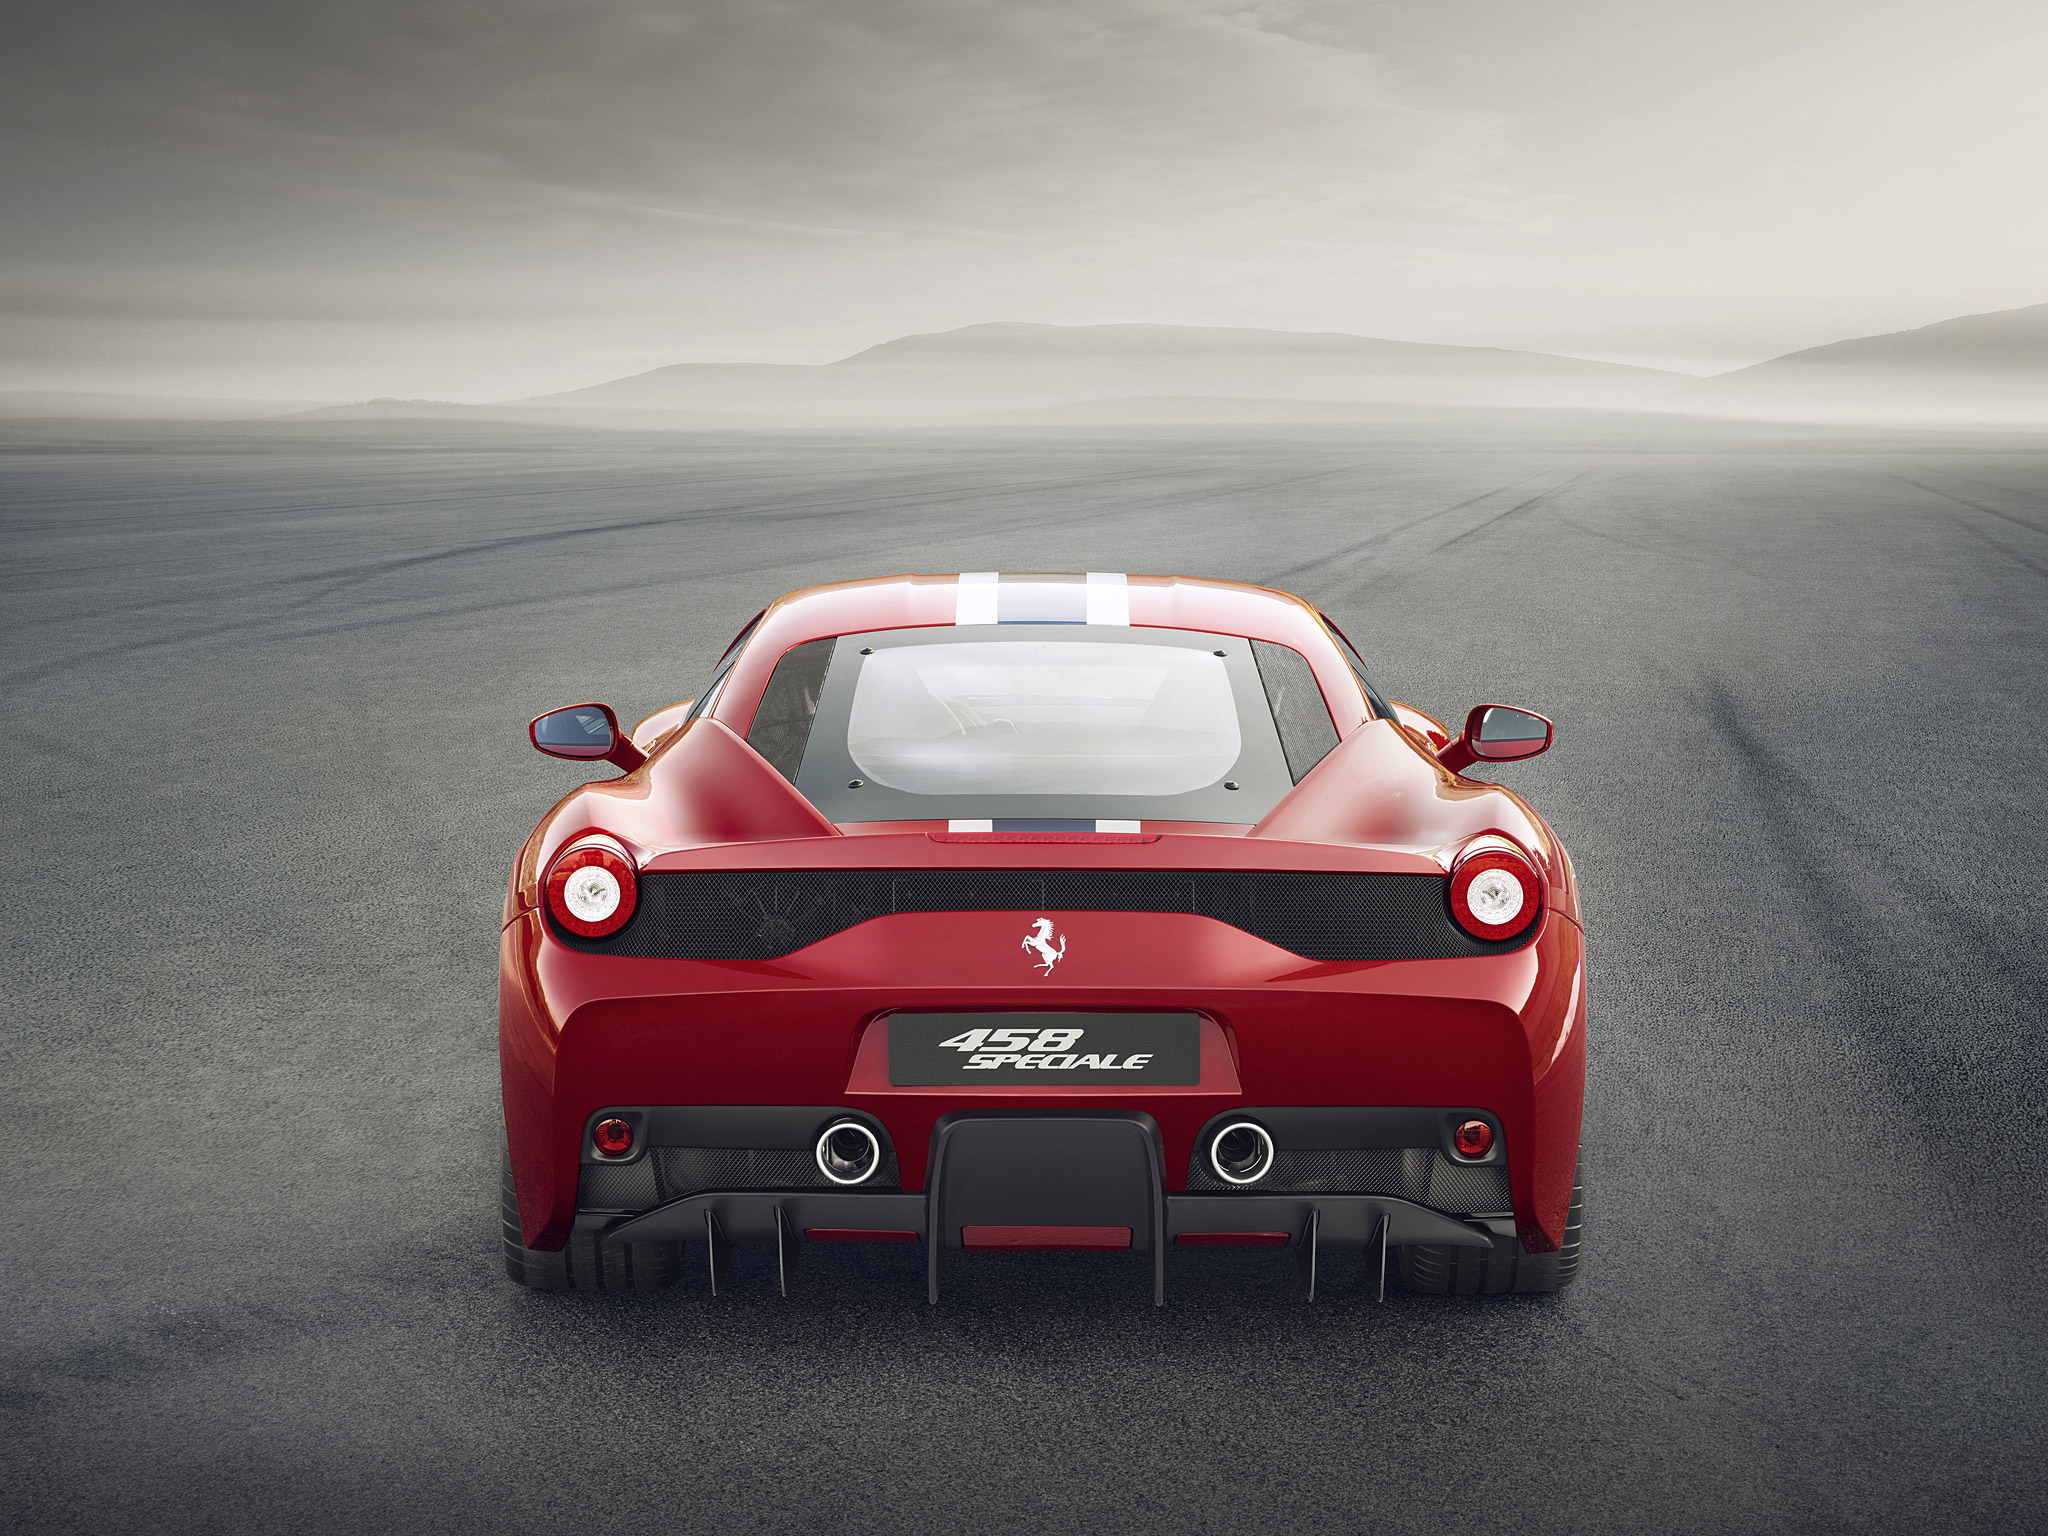  2014 Ferrari 458 Speciale Wallpaper.